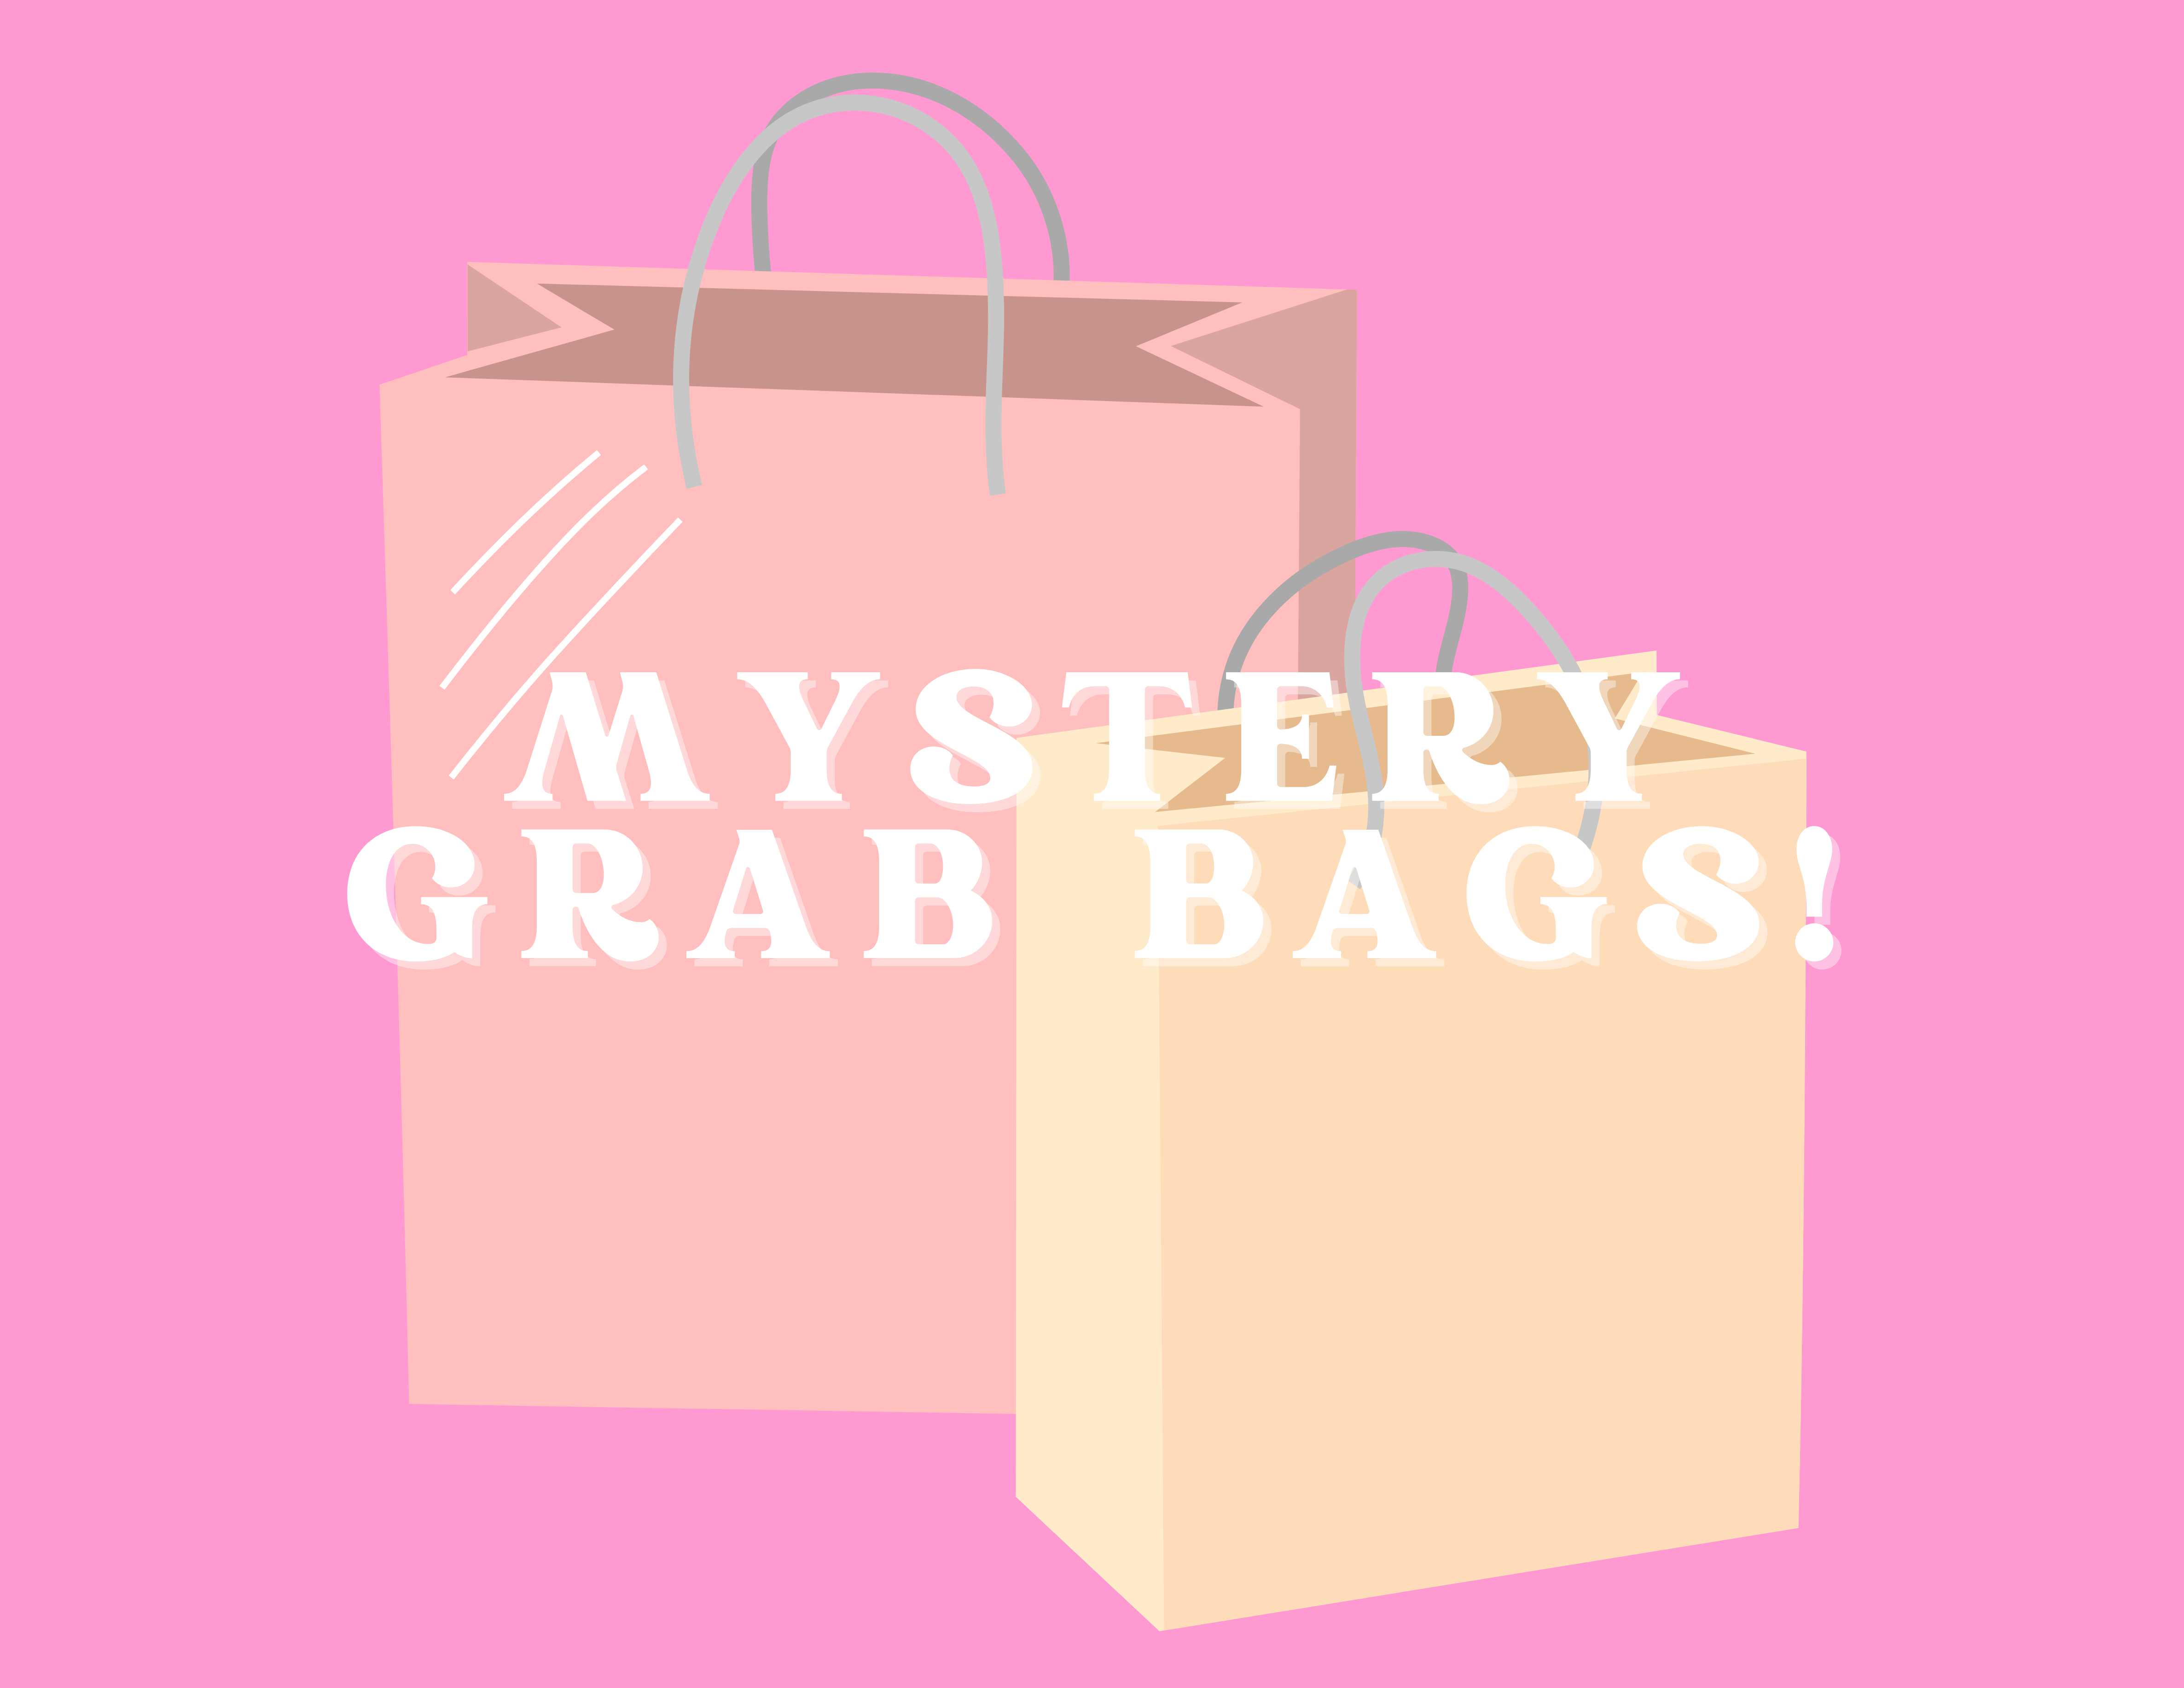 MYSTERY GRAB BAGS!